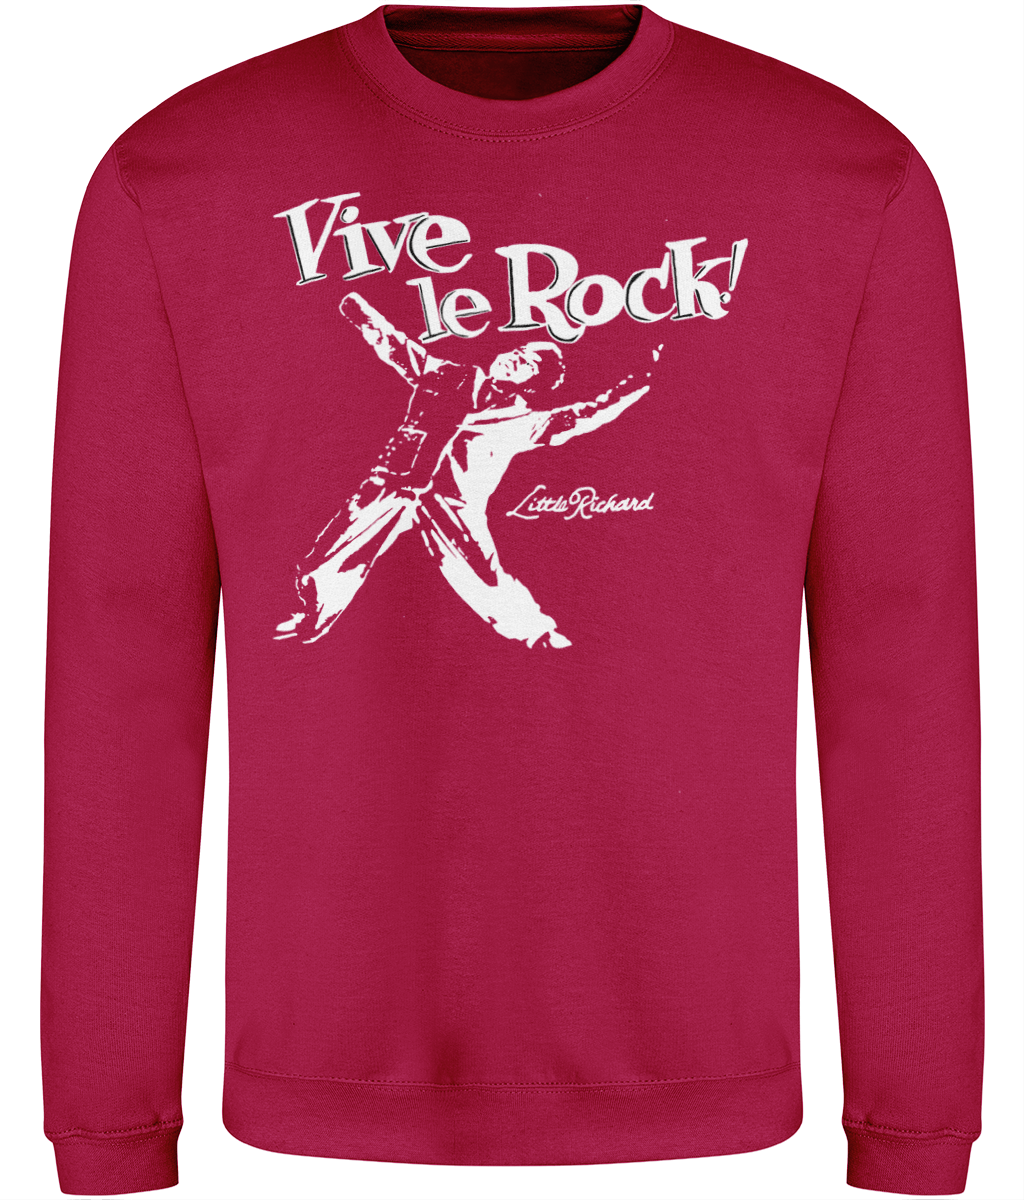 Little Richard-Sweatshirt-1972 Wembley Rock n Roll festival-GAS T Shirts